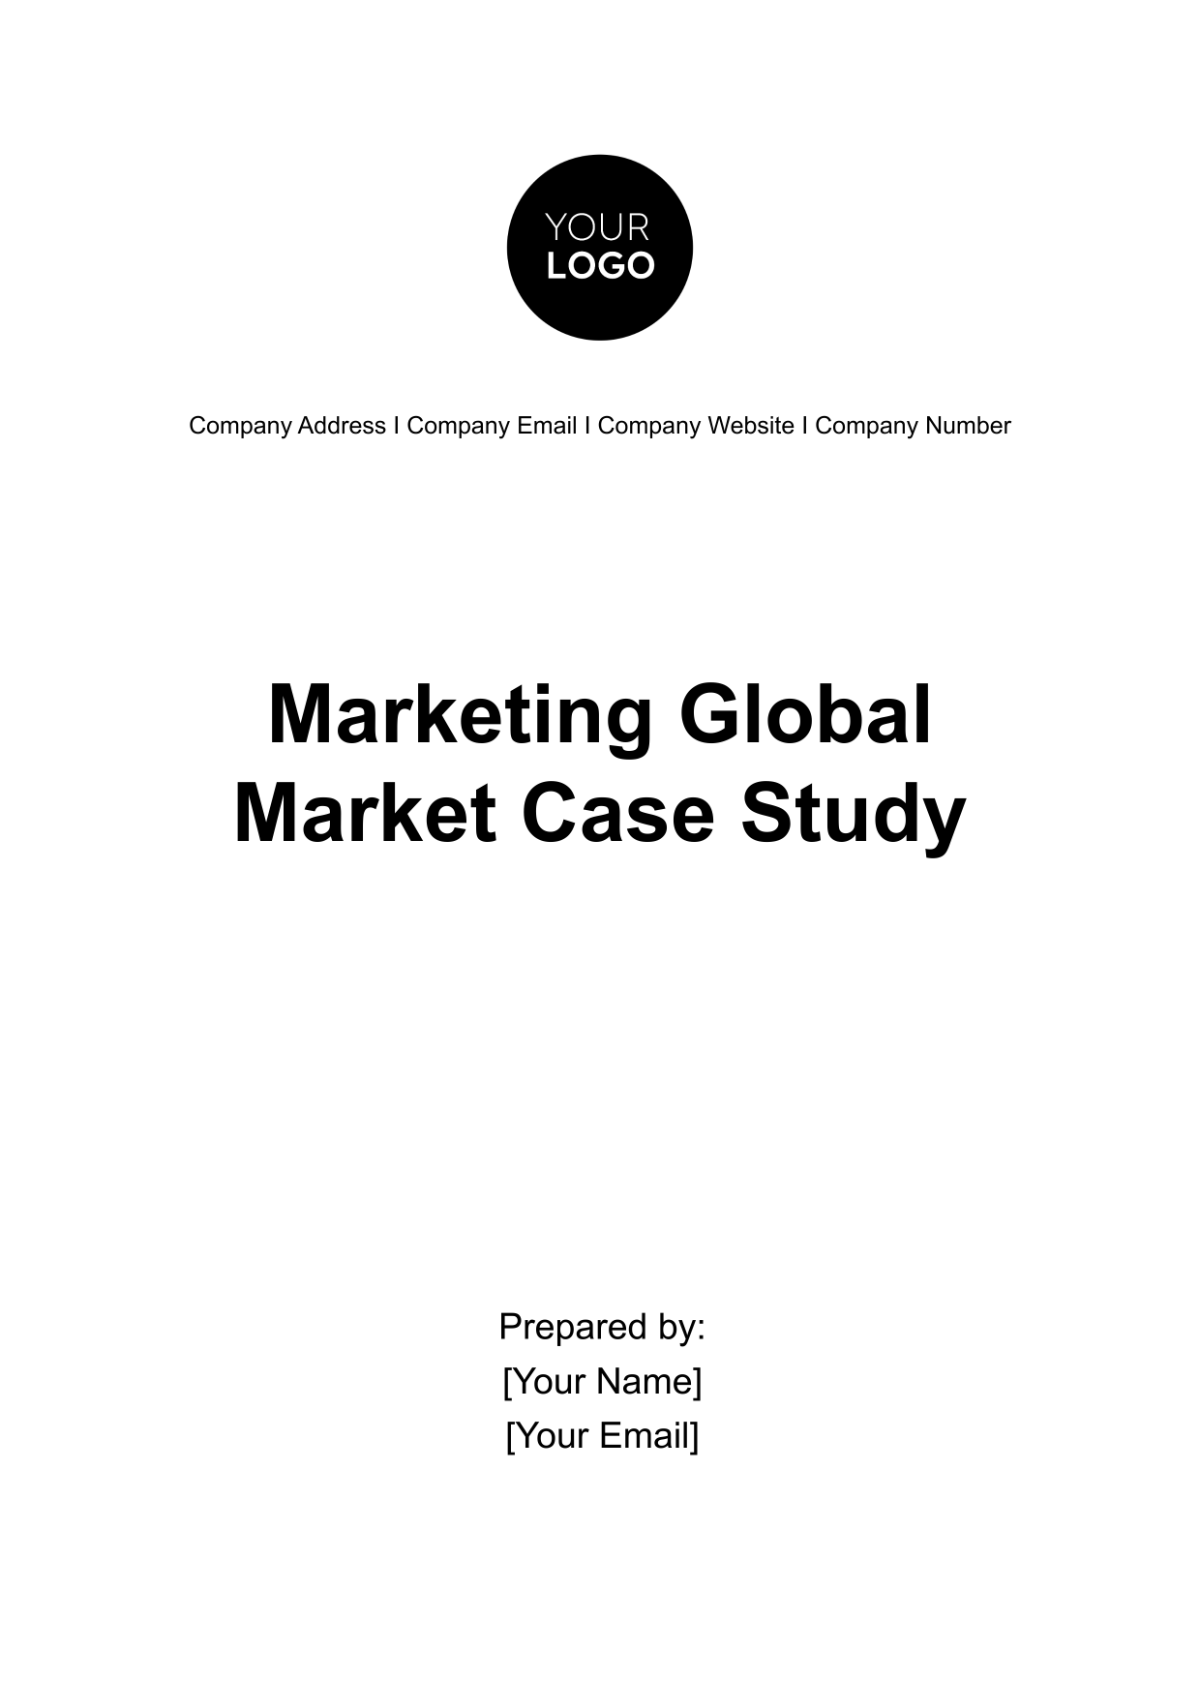 Marketing Global Market Case Study Template